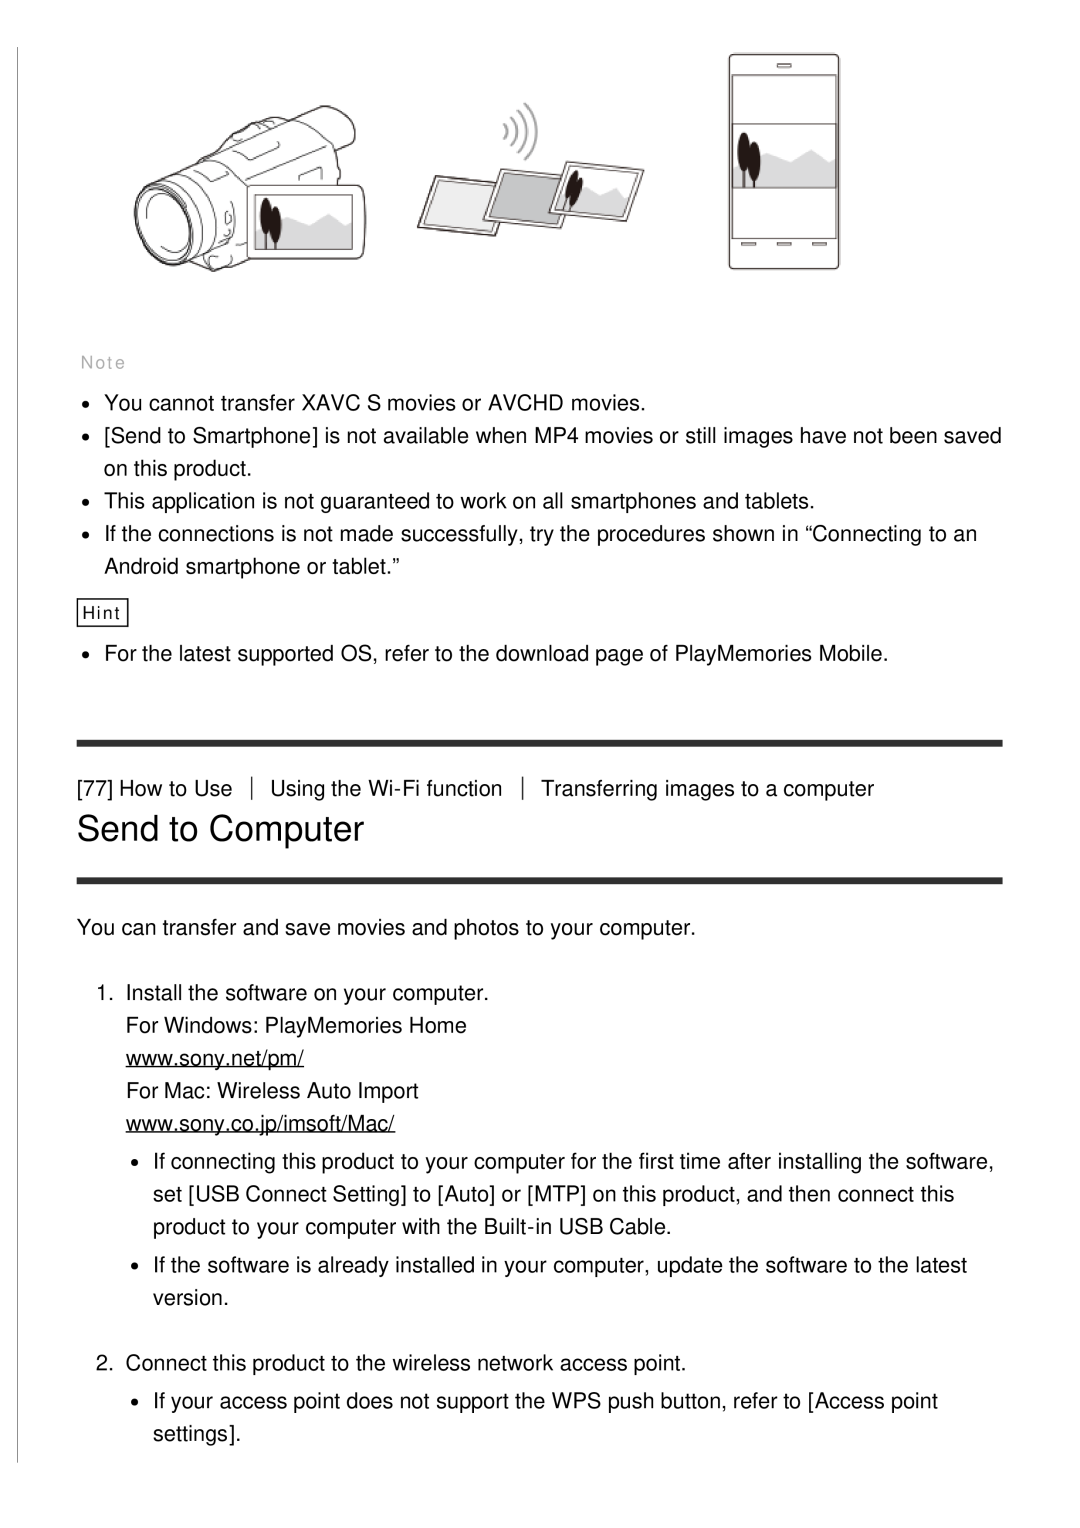 Sony FDR-AX100E, HDR-CX900E manual Send to Computer 